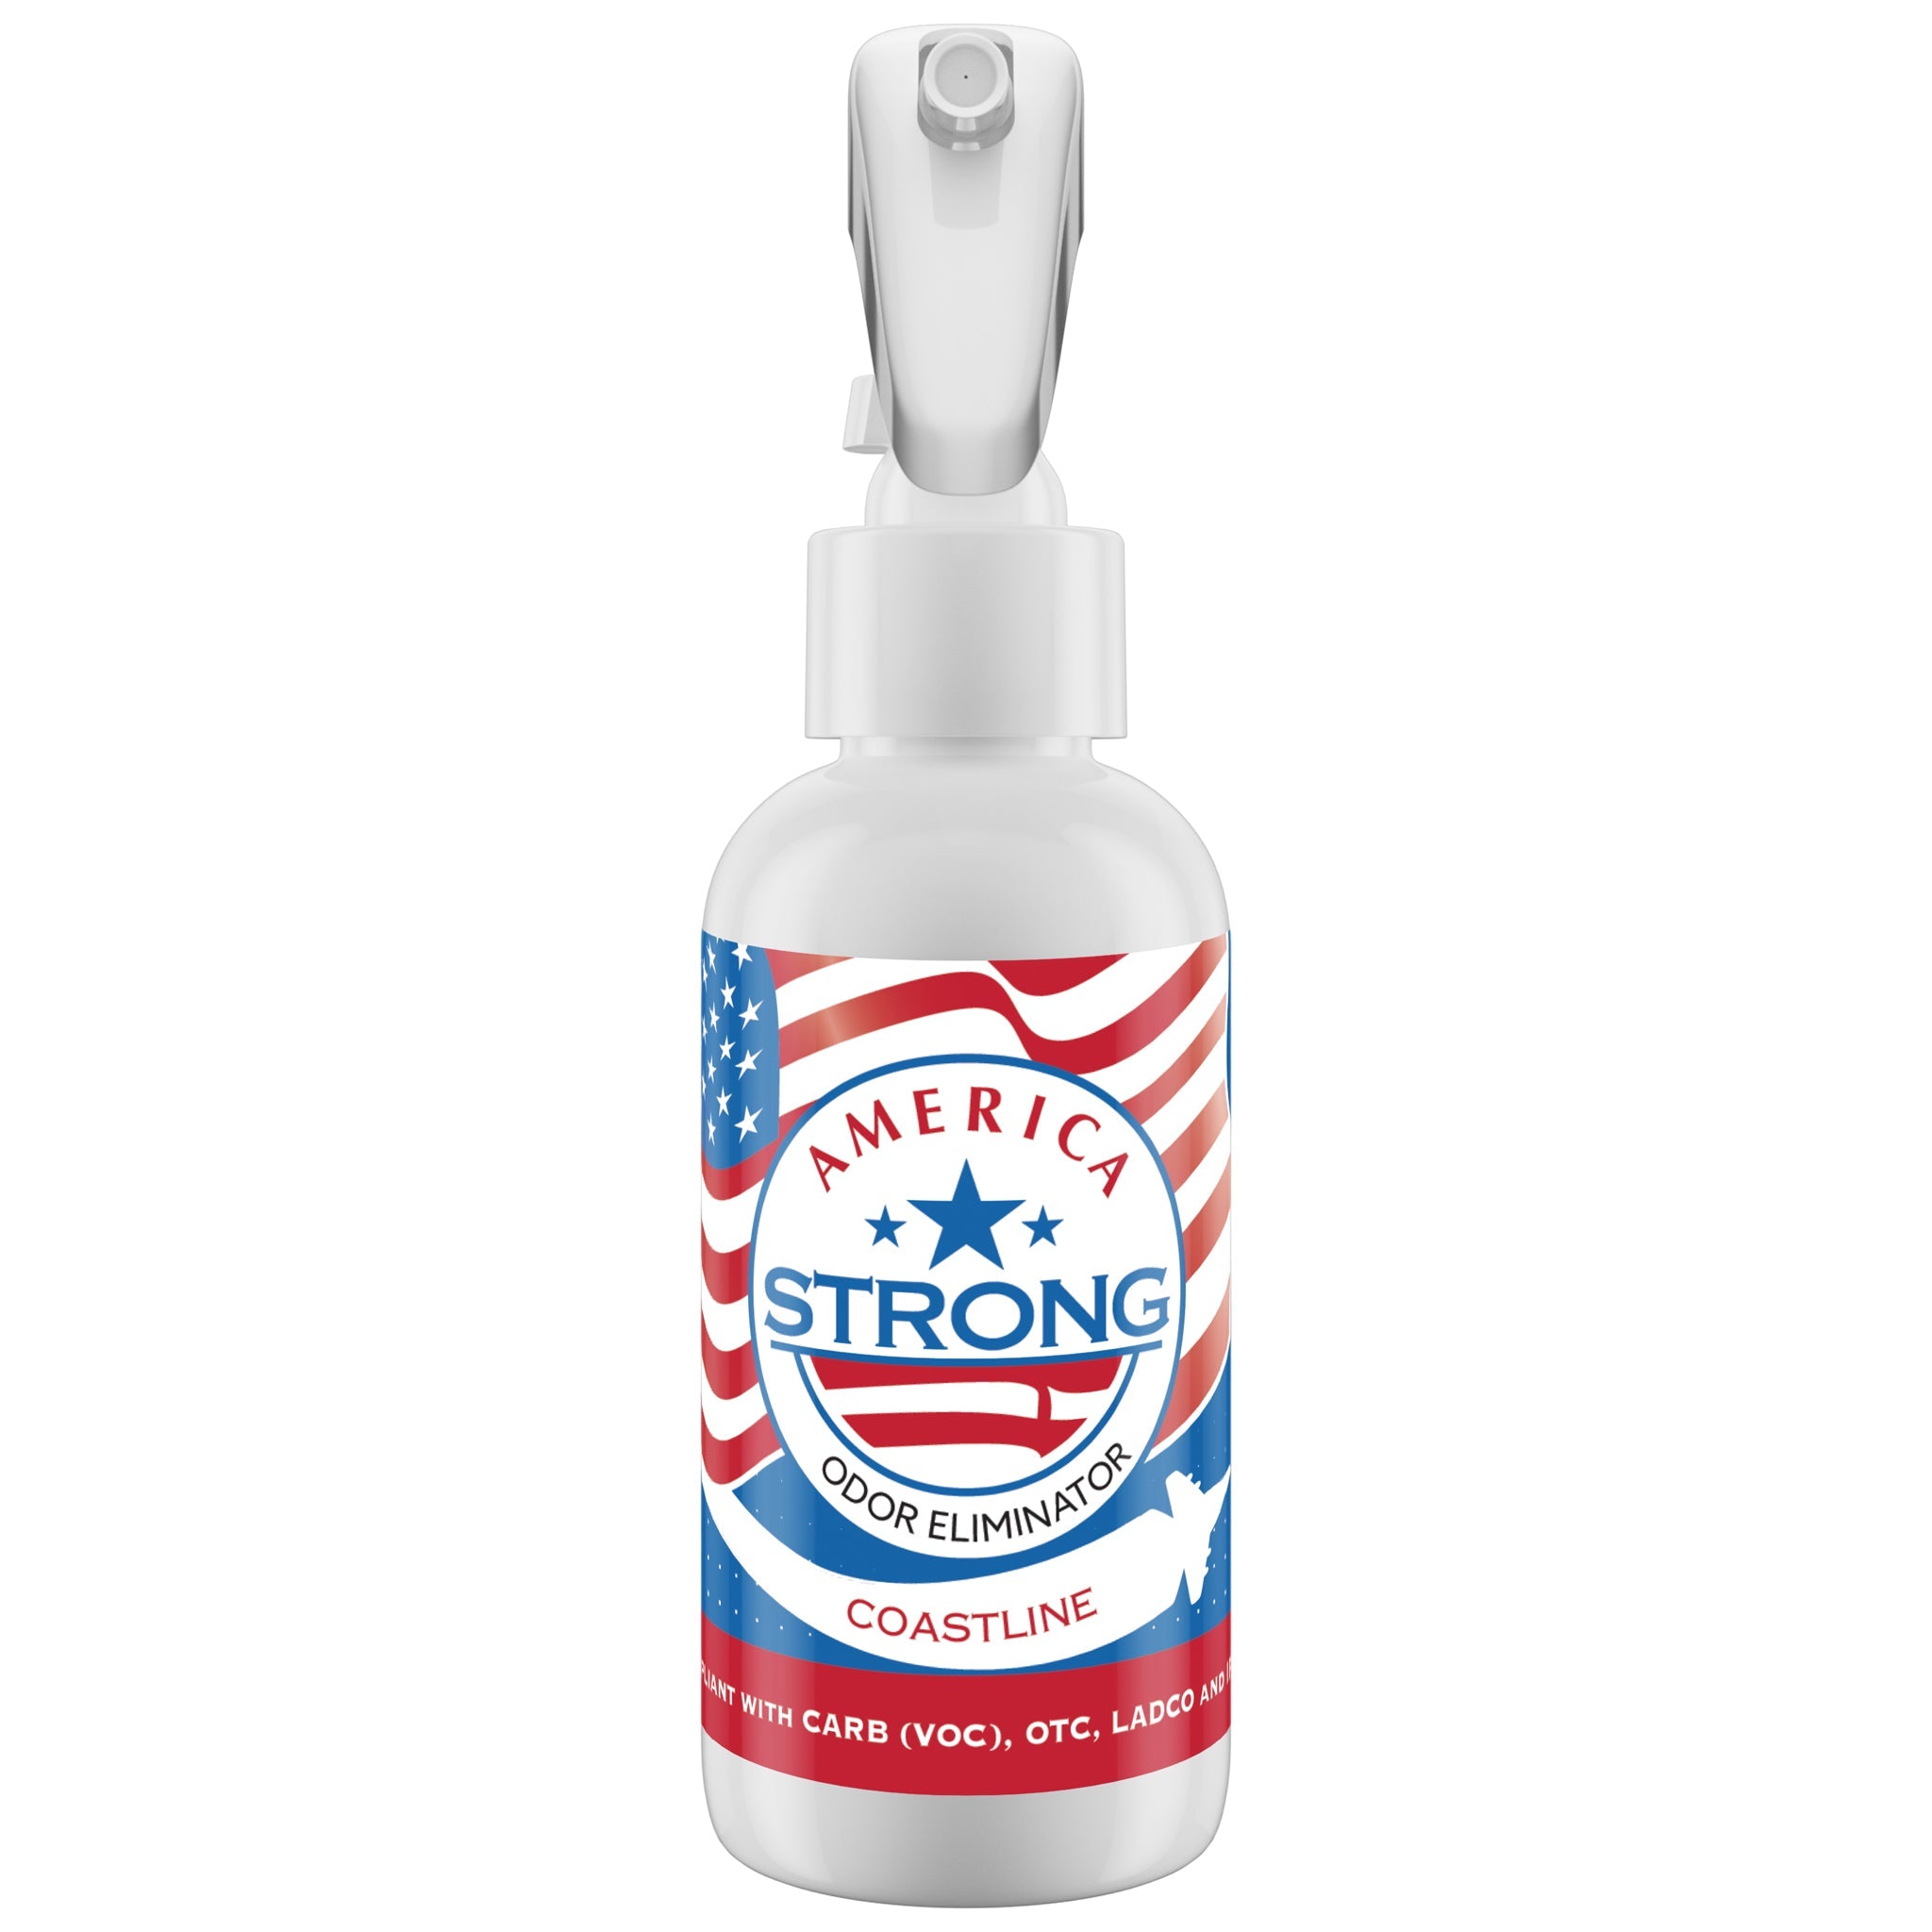 America Strong Odor Eliminator - Coastline Scent Size: 4.0oz